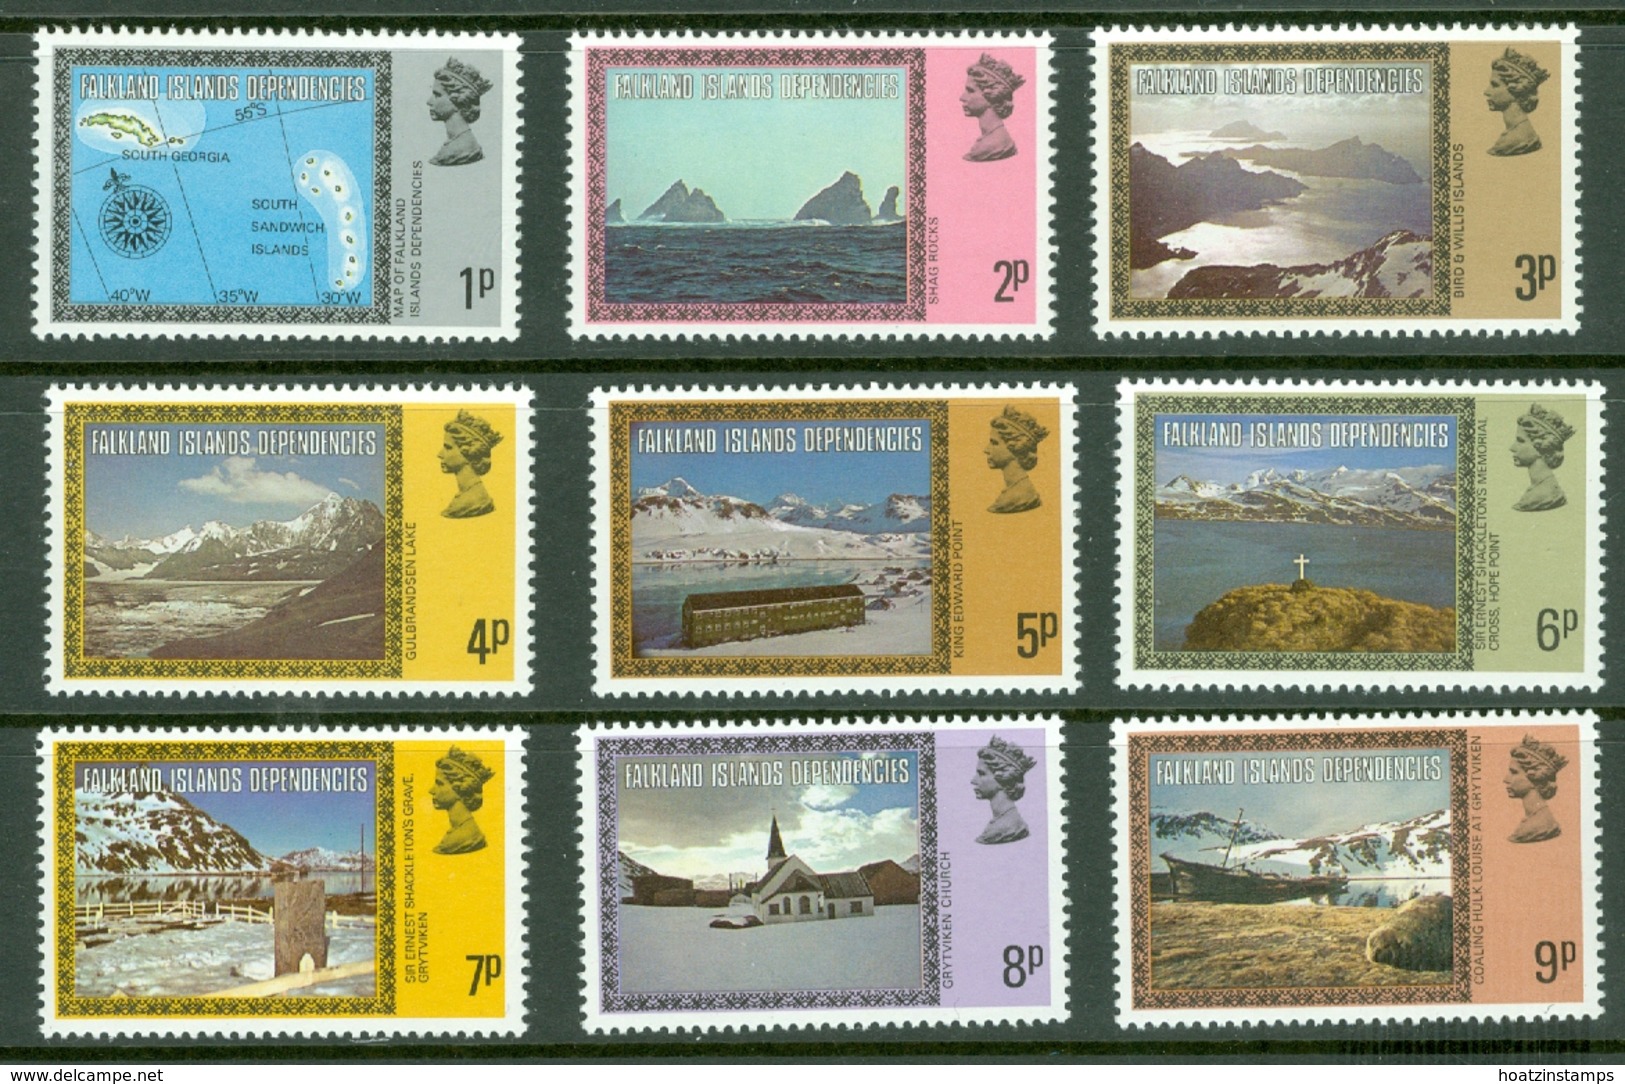 Falkland Islands Dep: 1980/84   Pictorials Set   SG74A-88A  [without Imprint Date]         MH - Falklandinseln